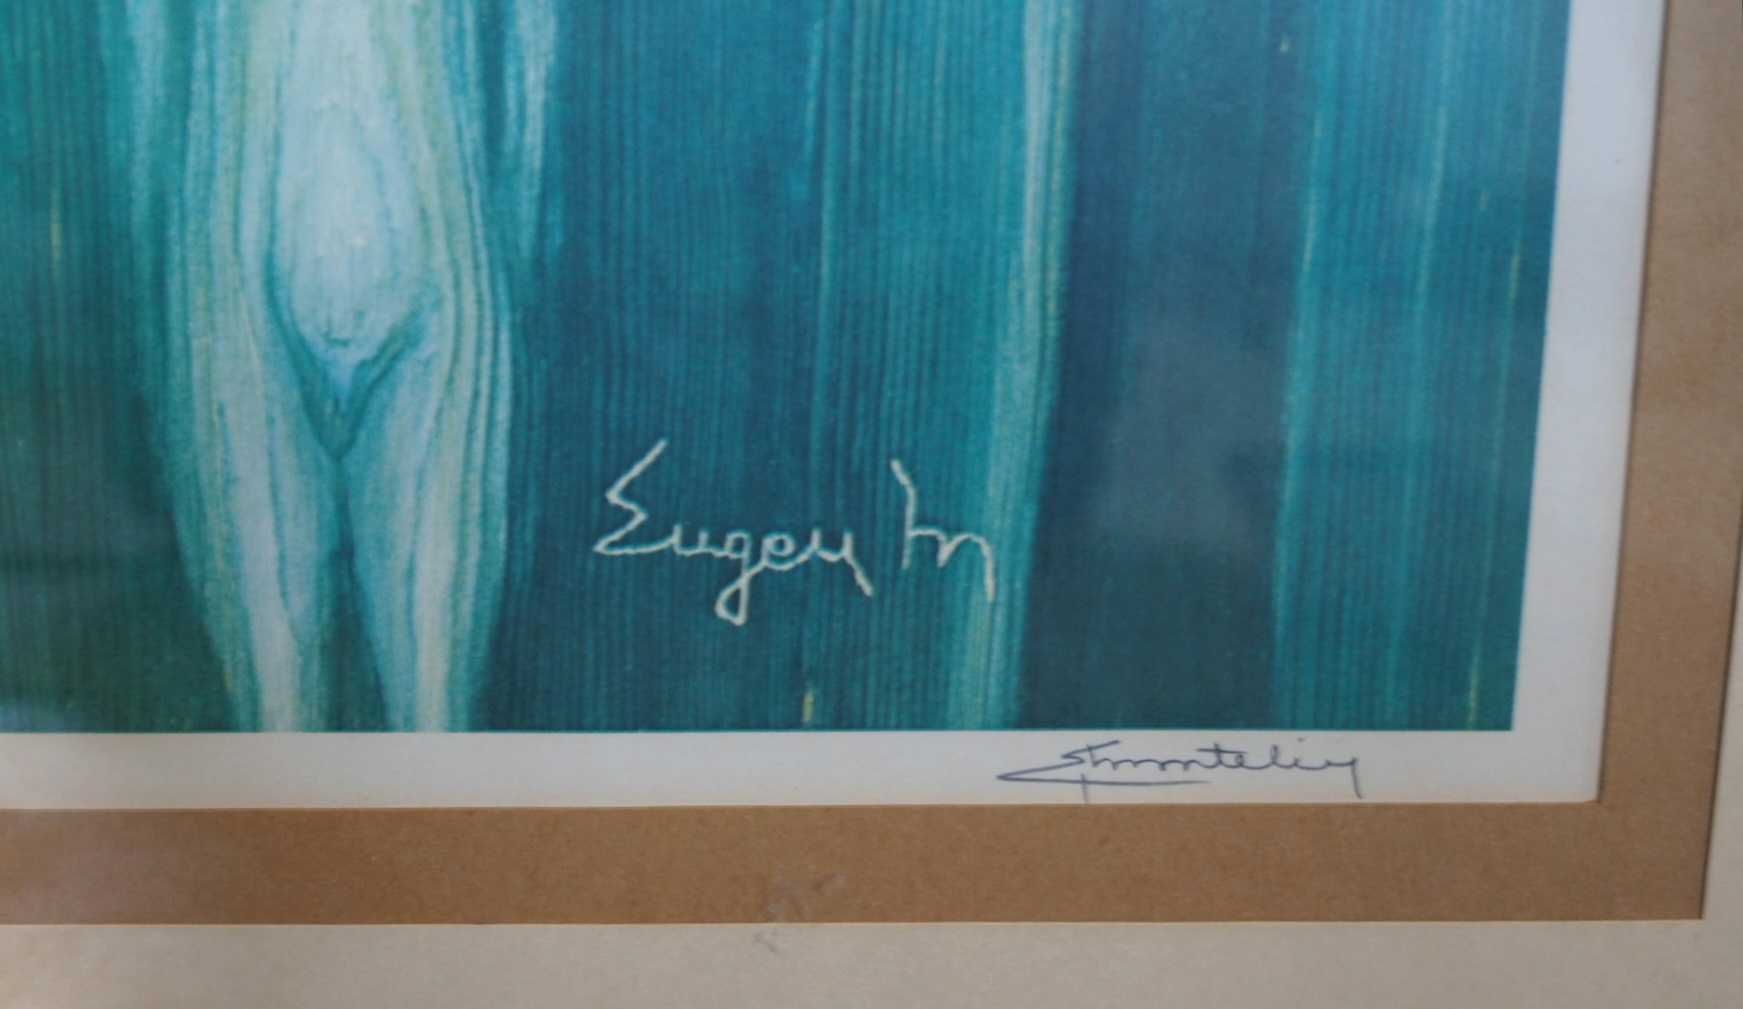 Sygnowana, unikatowa litografia za szkłem od Eugen Montelin. Lata 70.